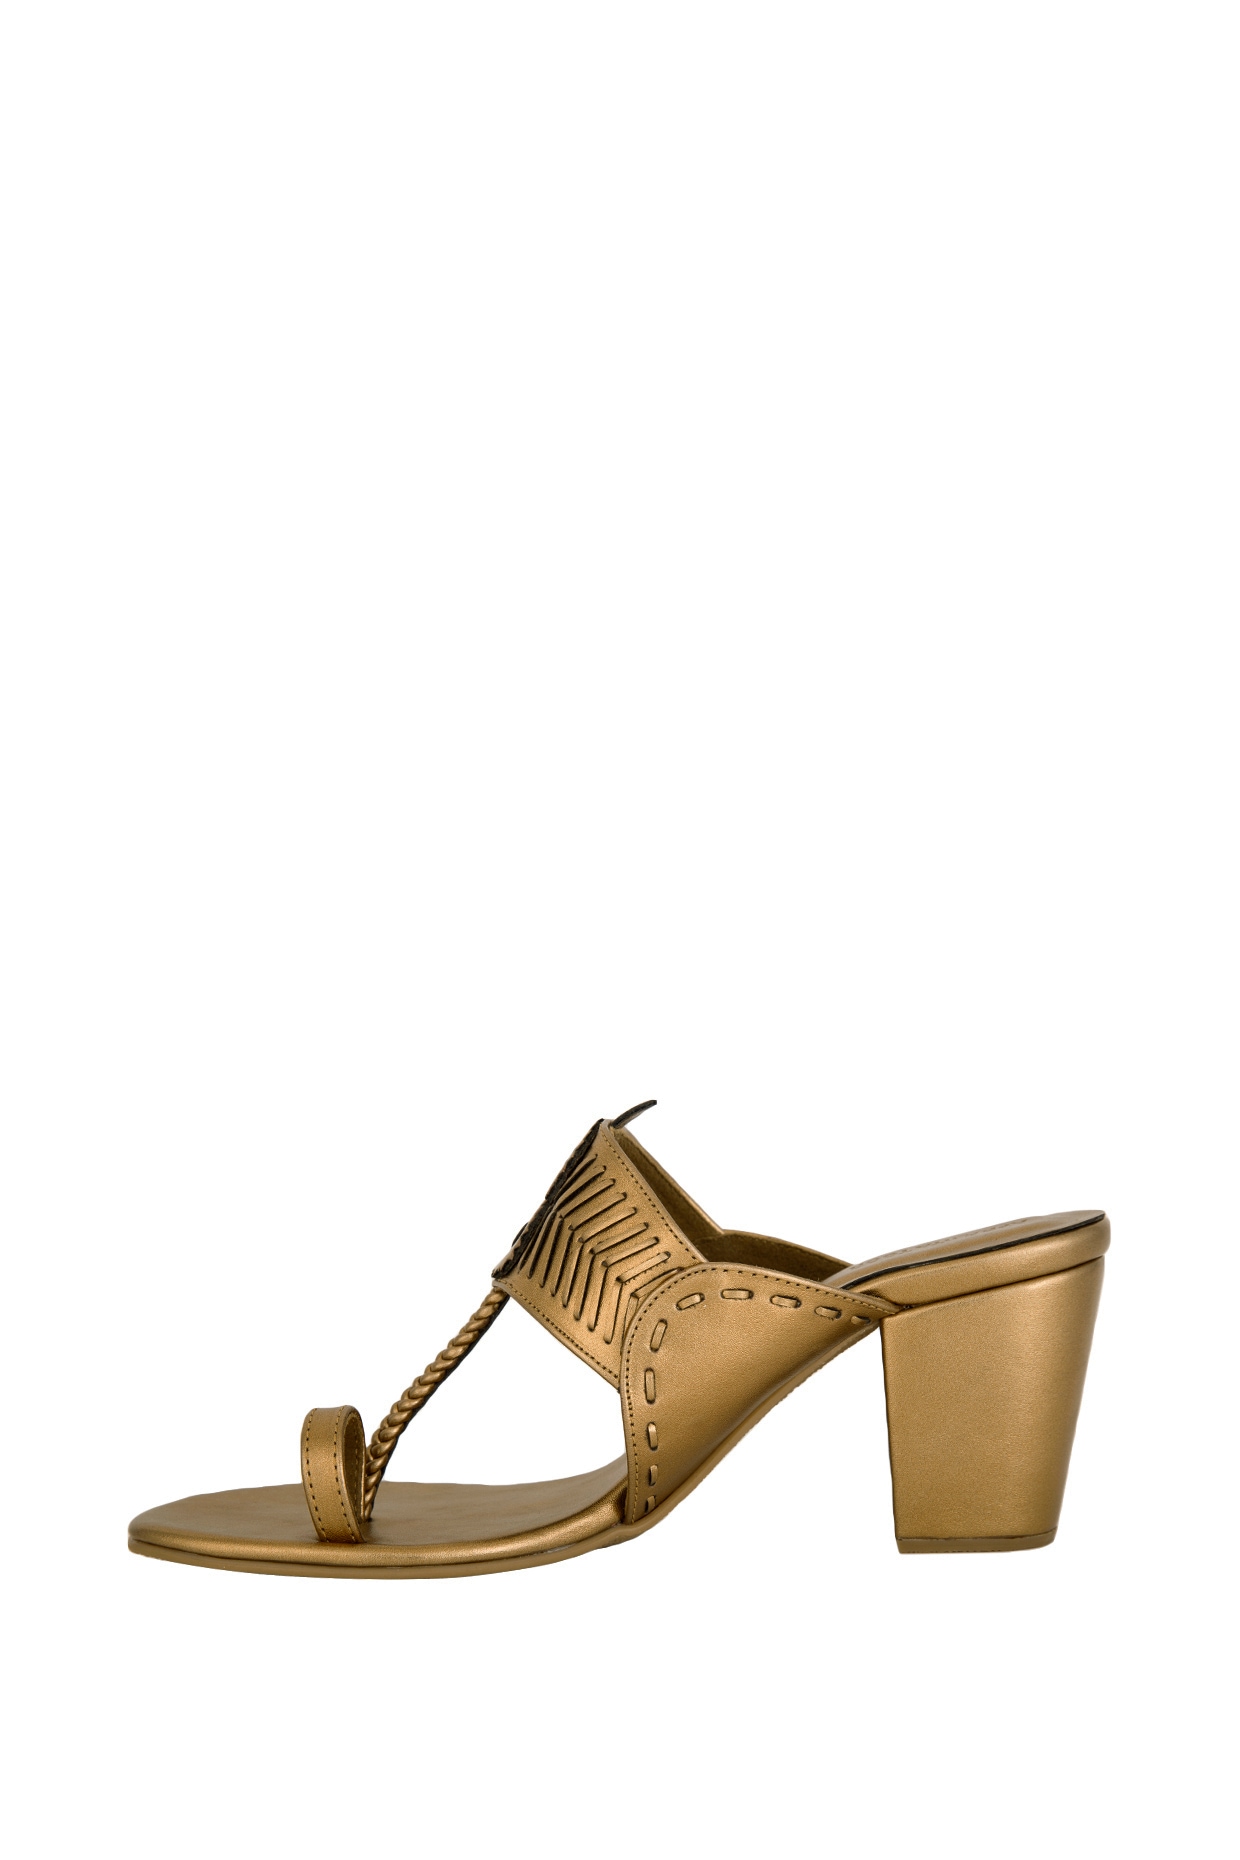 Metallic Gold Cross Strap Chunky Block Heels: Chere Footwear